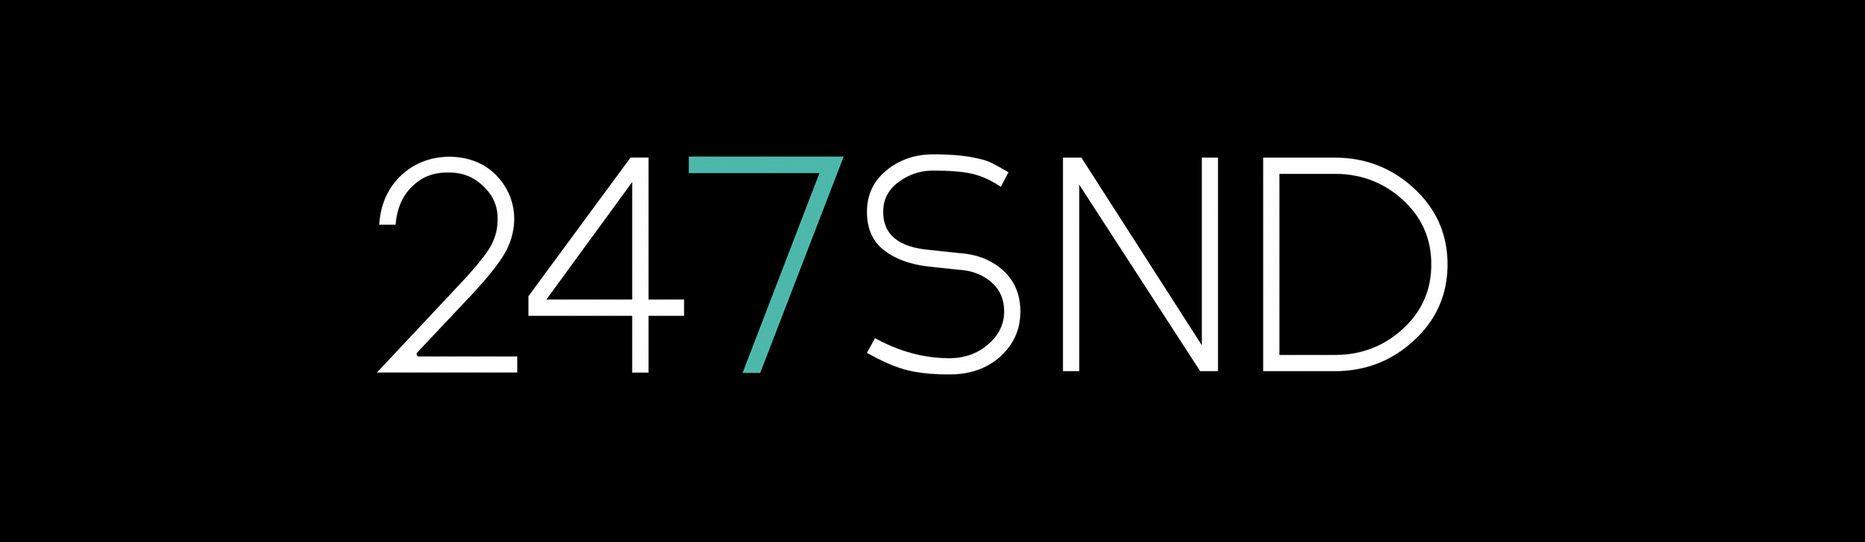 Twenty-Four Logo - Twenty Four Seven Sound